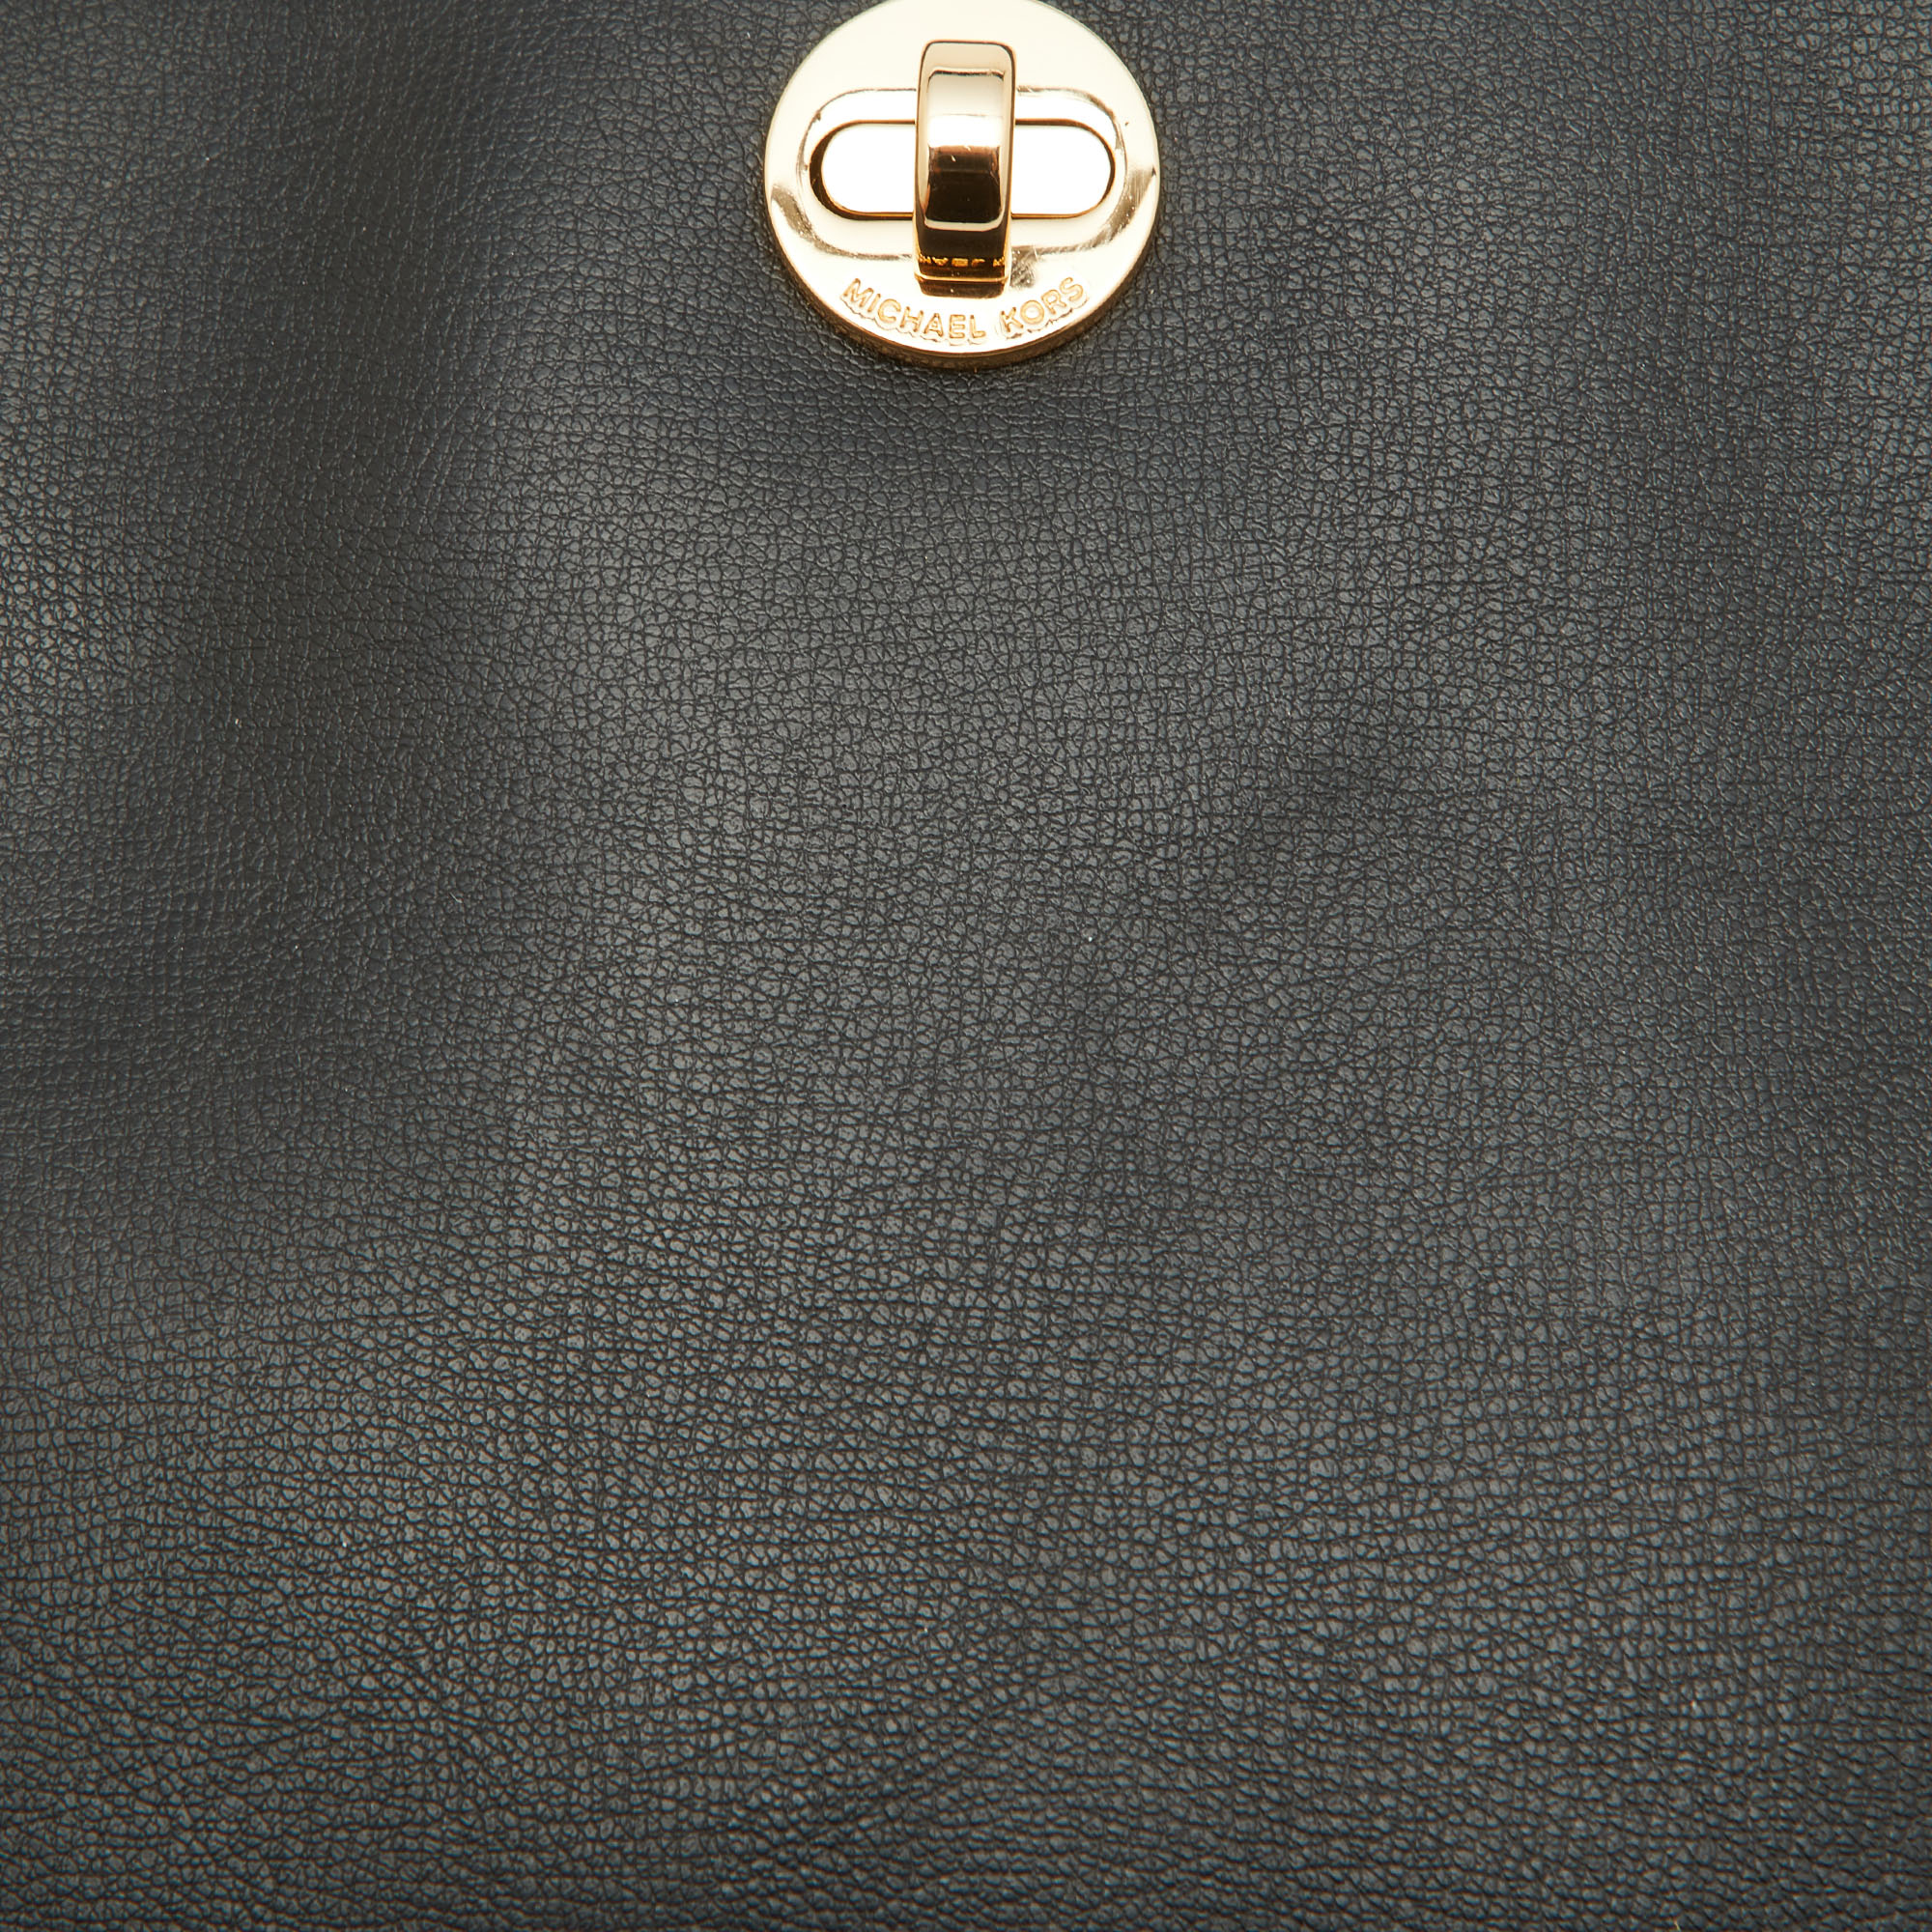 Michael Korse Black Leather Turnlock Crossbody Bag